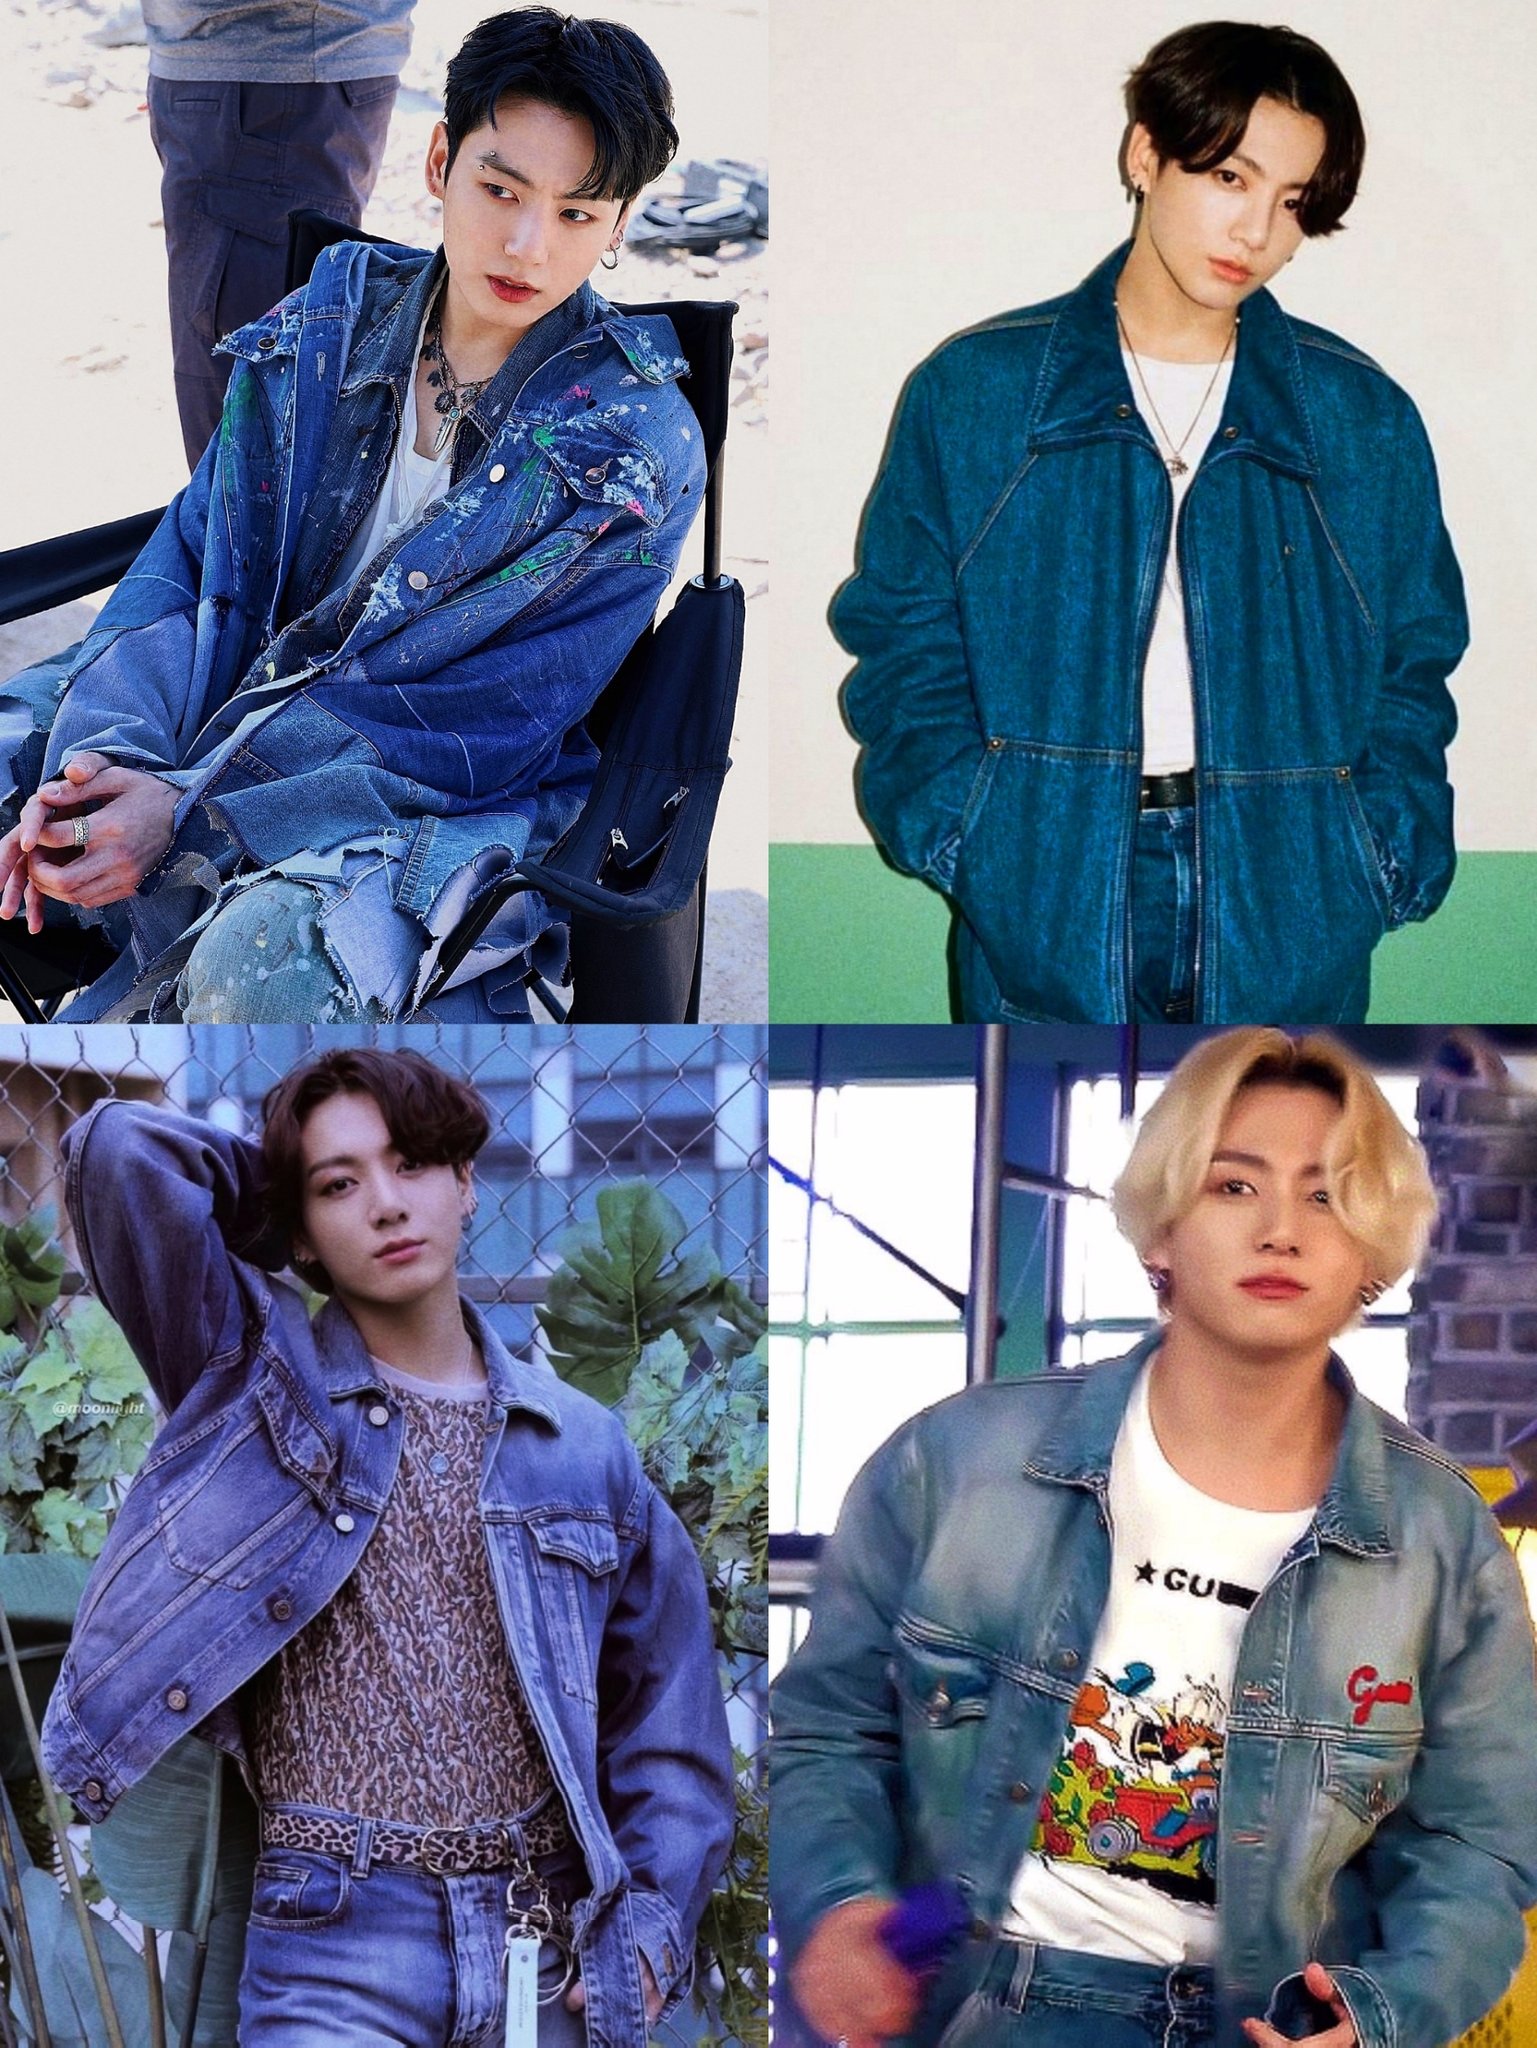 Jungkookpie on X: Jungkook is wearing denim jackets, so cool   / X